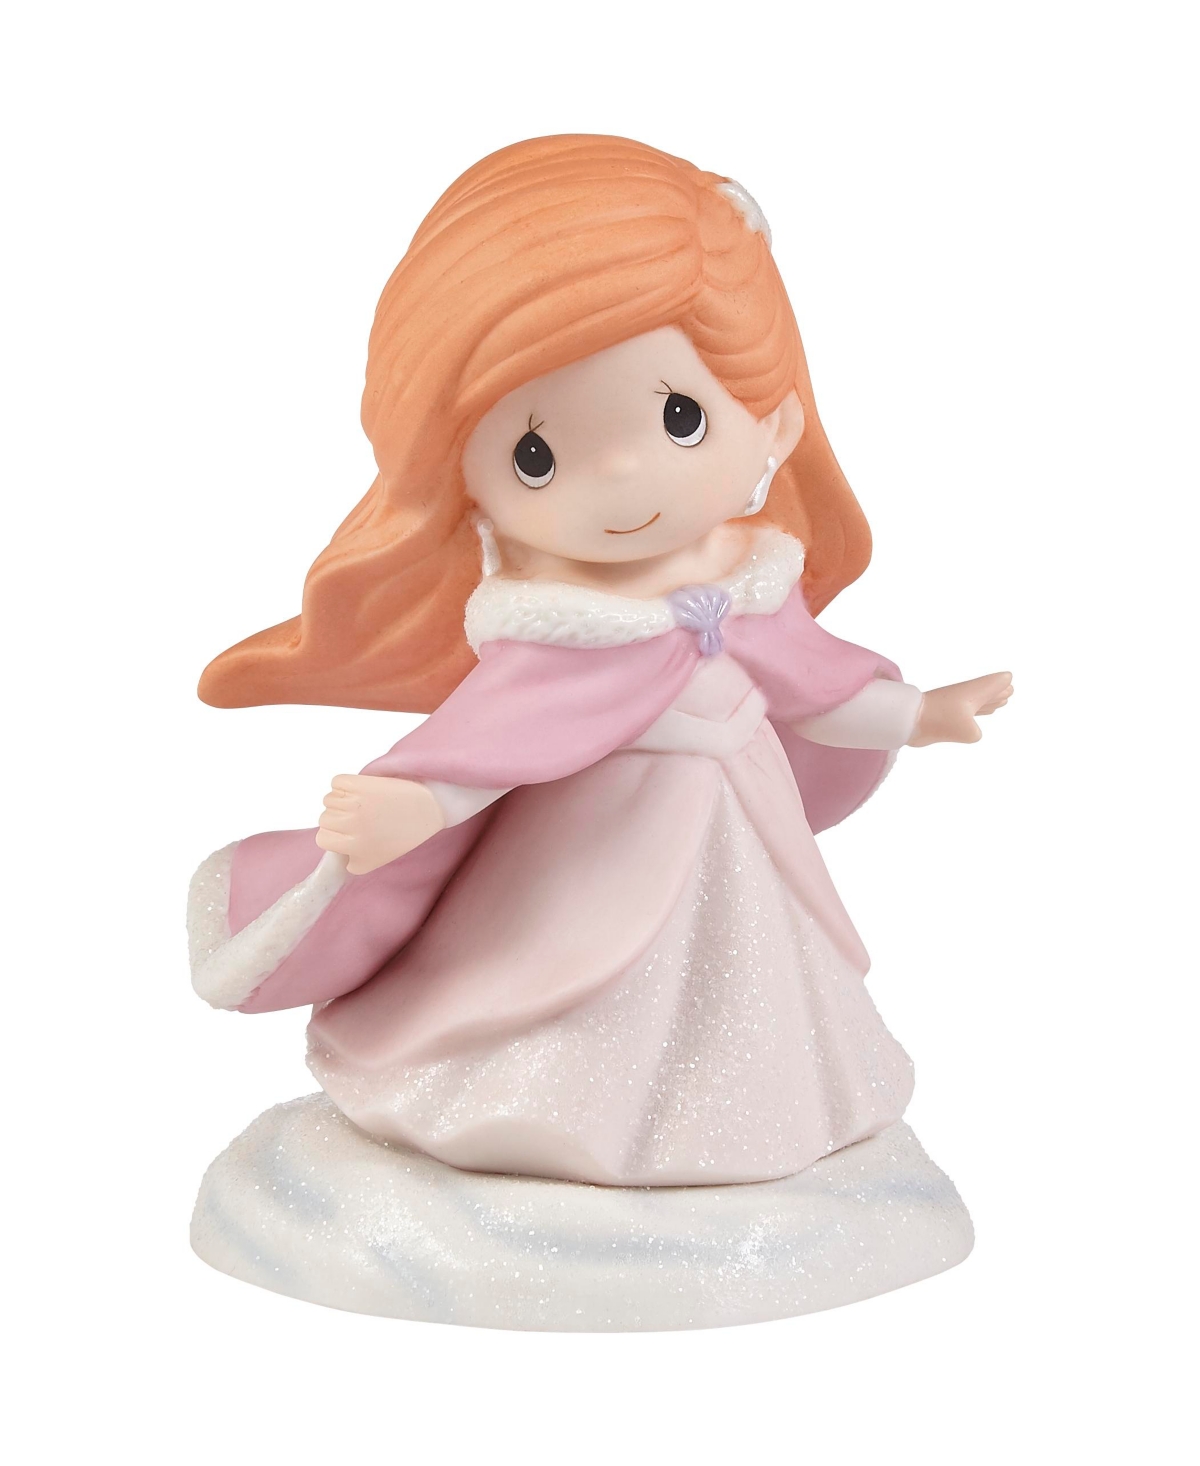 221040 Disney Ariel Bundled Up and Ready for Adventure Bisque Porcelain Figurine - Multicolor